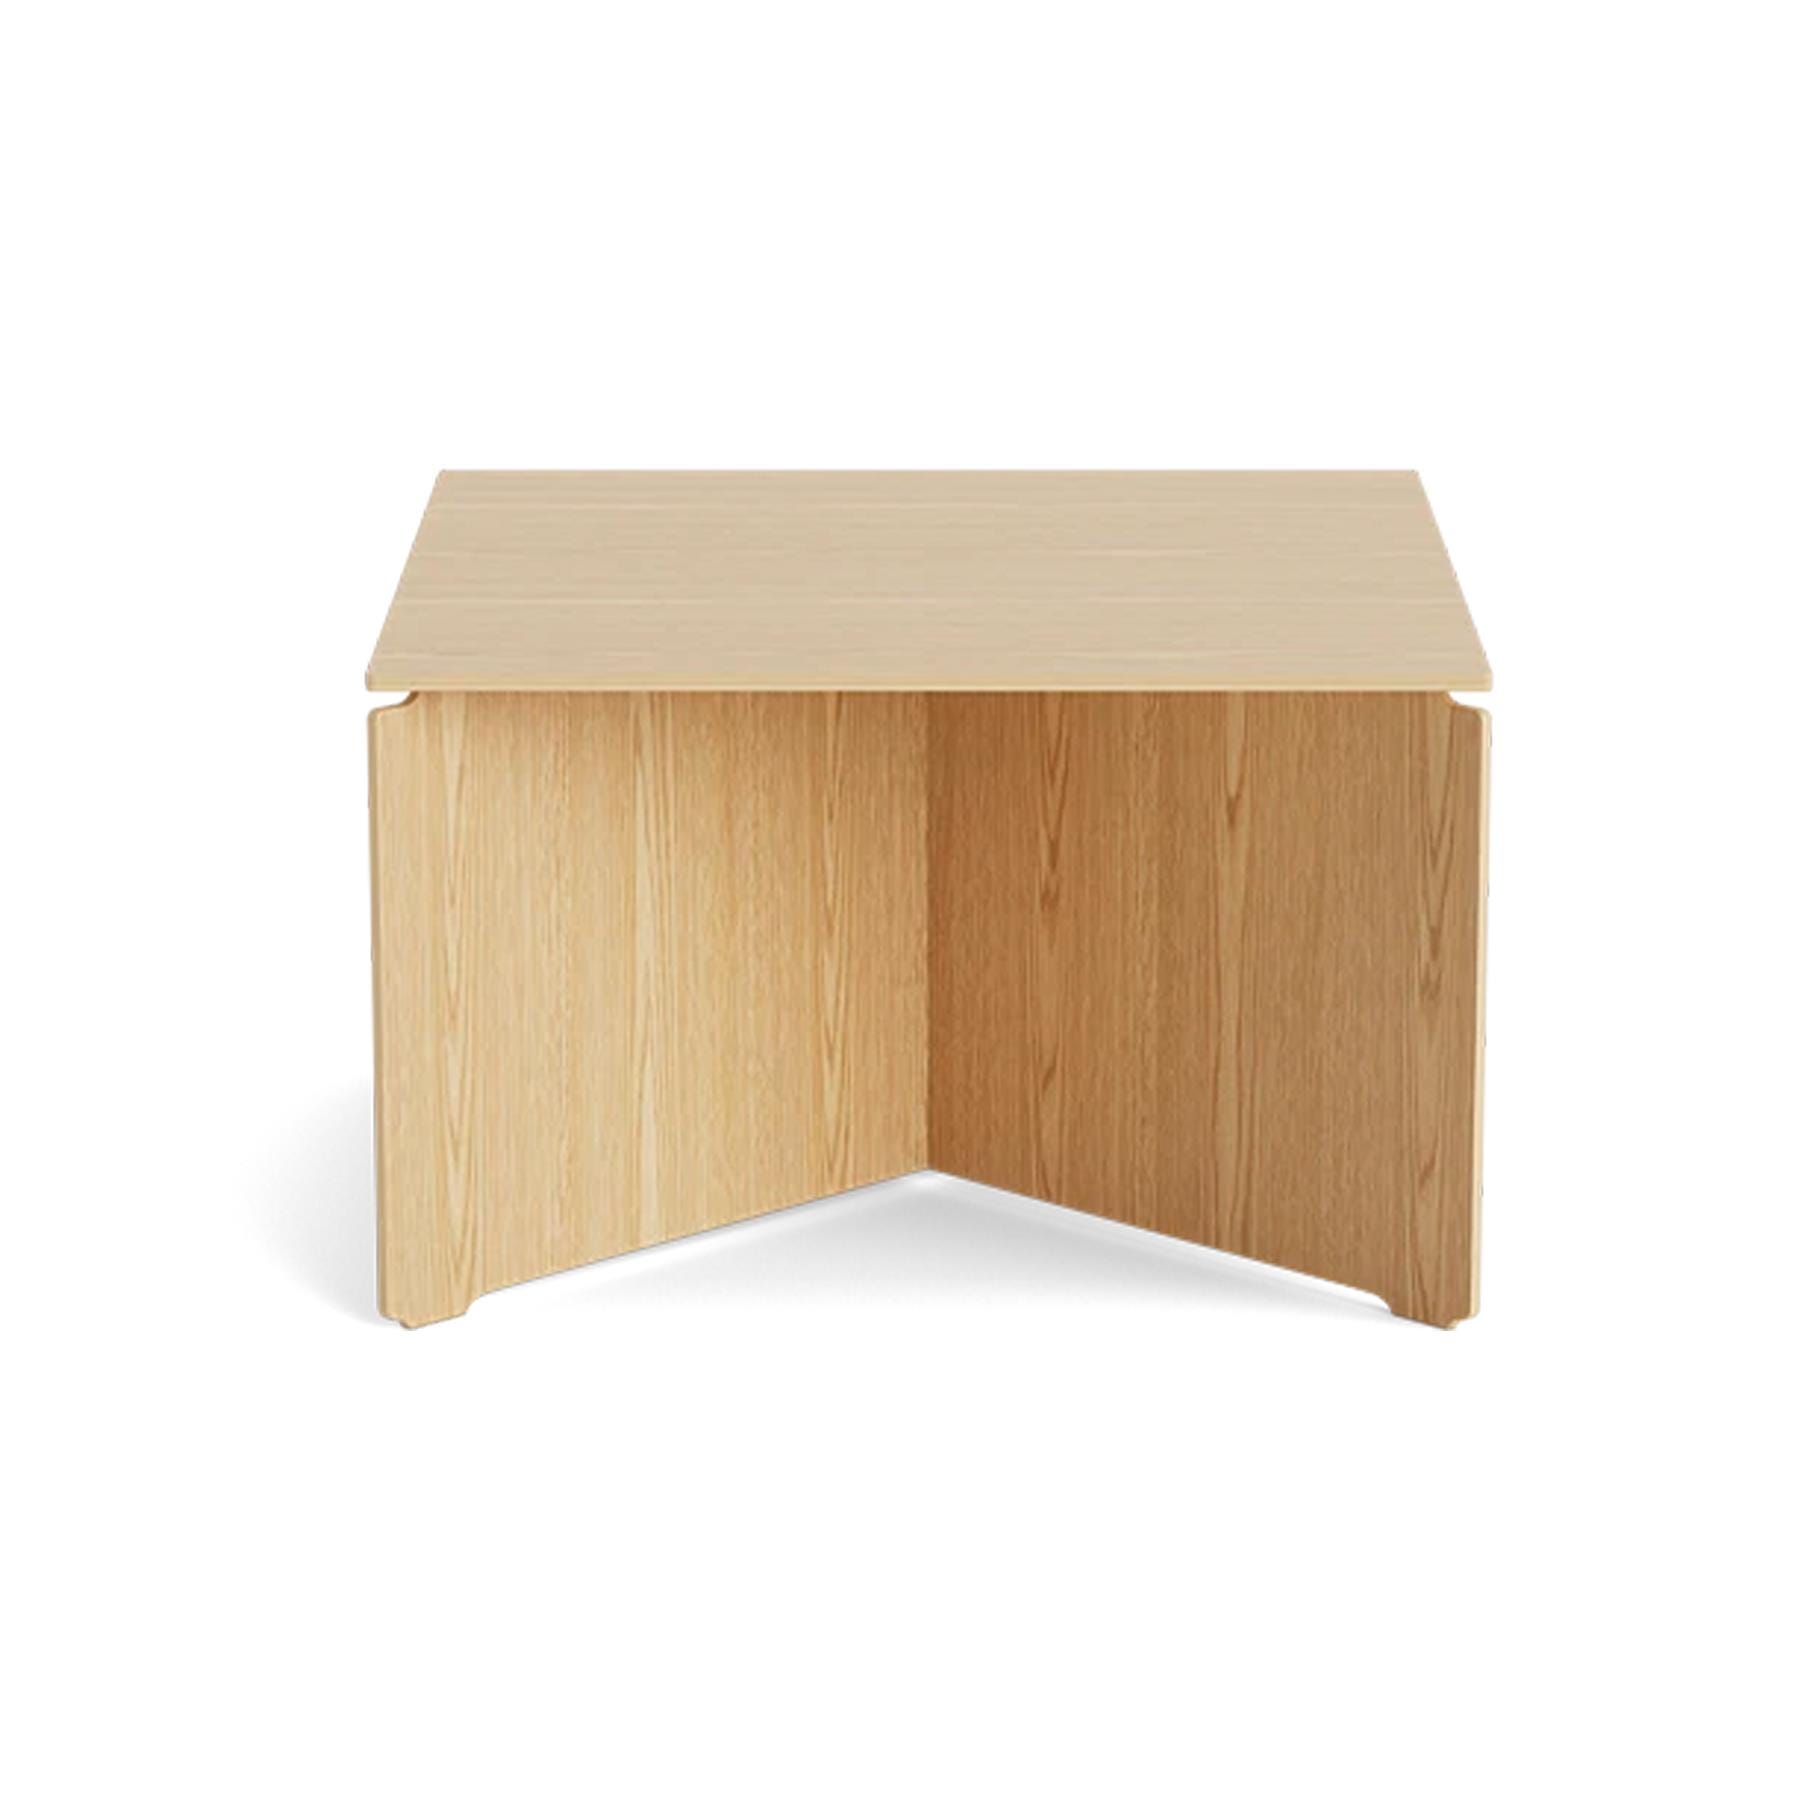 Make Nordic Crossboarder Coffee Table Natural Oak Veneer Large Light Wood Designer Furniture From Holloways Of Ludlow